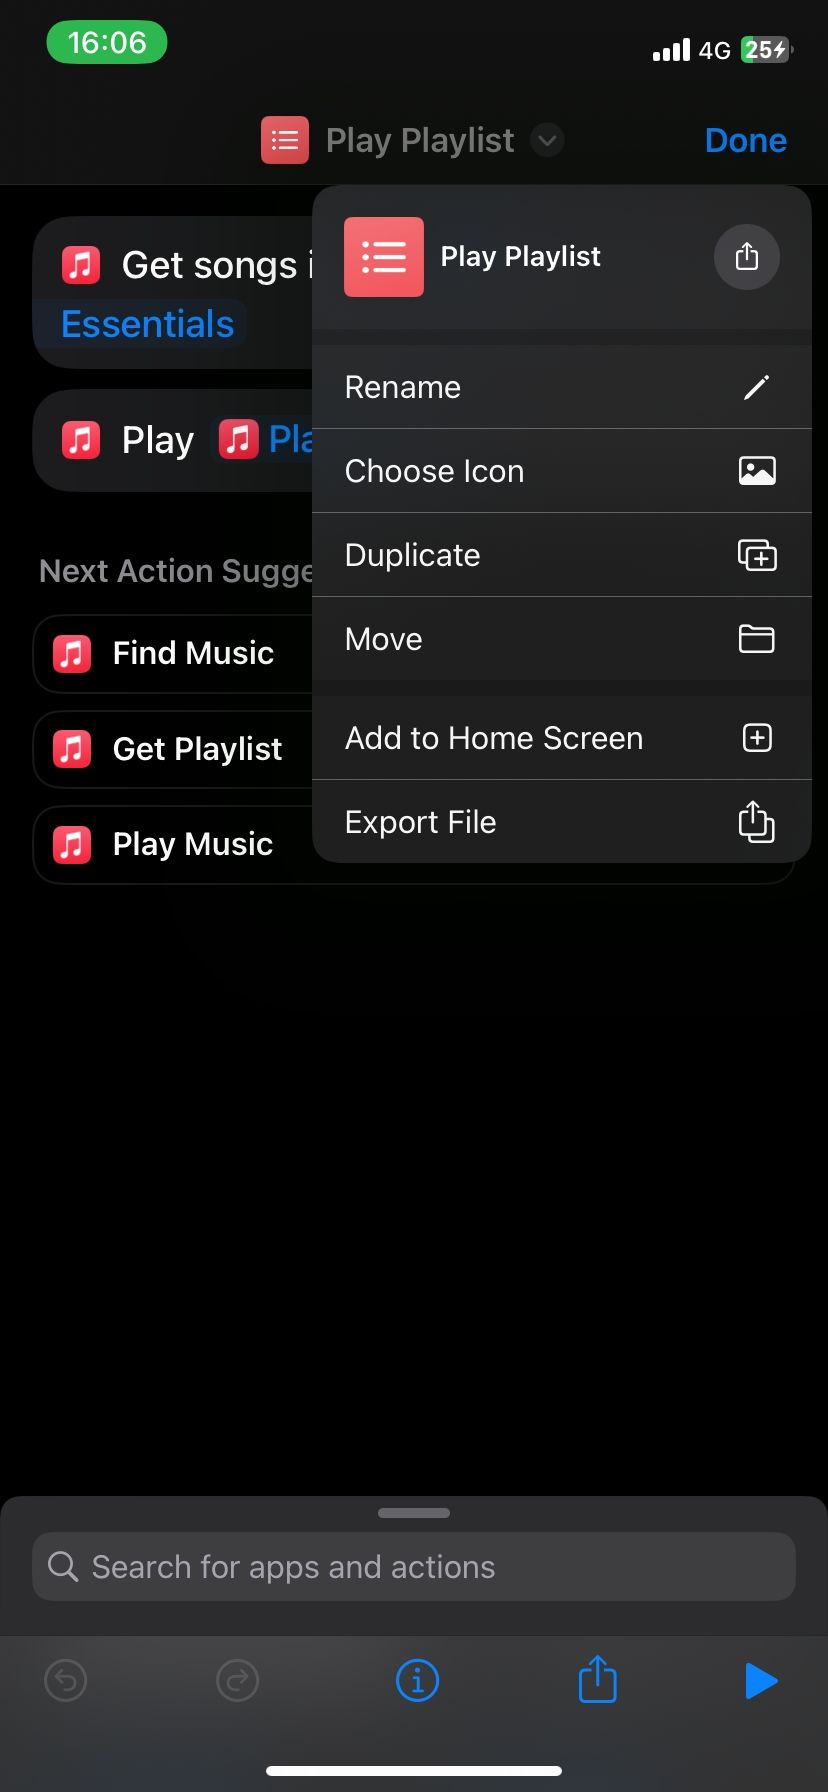 Play Playlist shortcut customization options